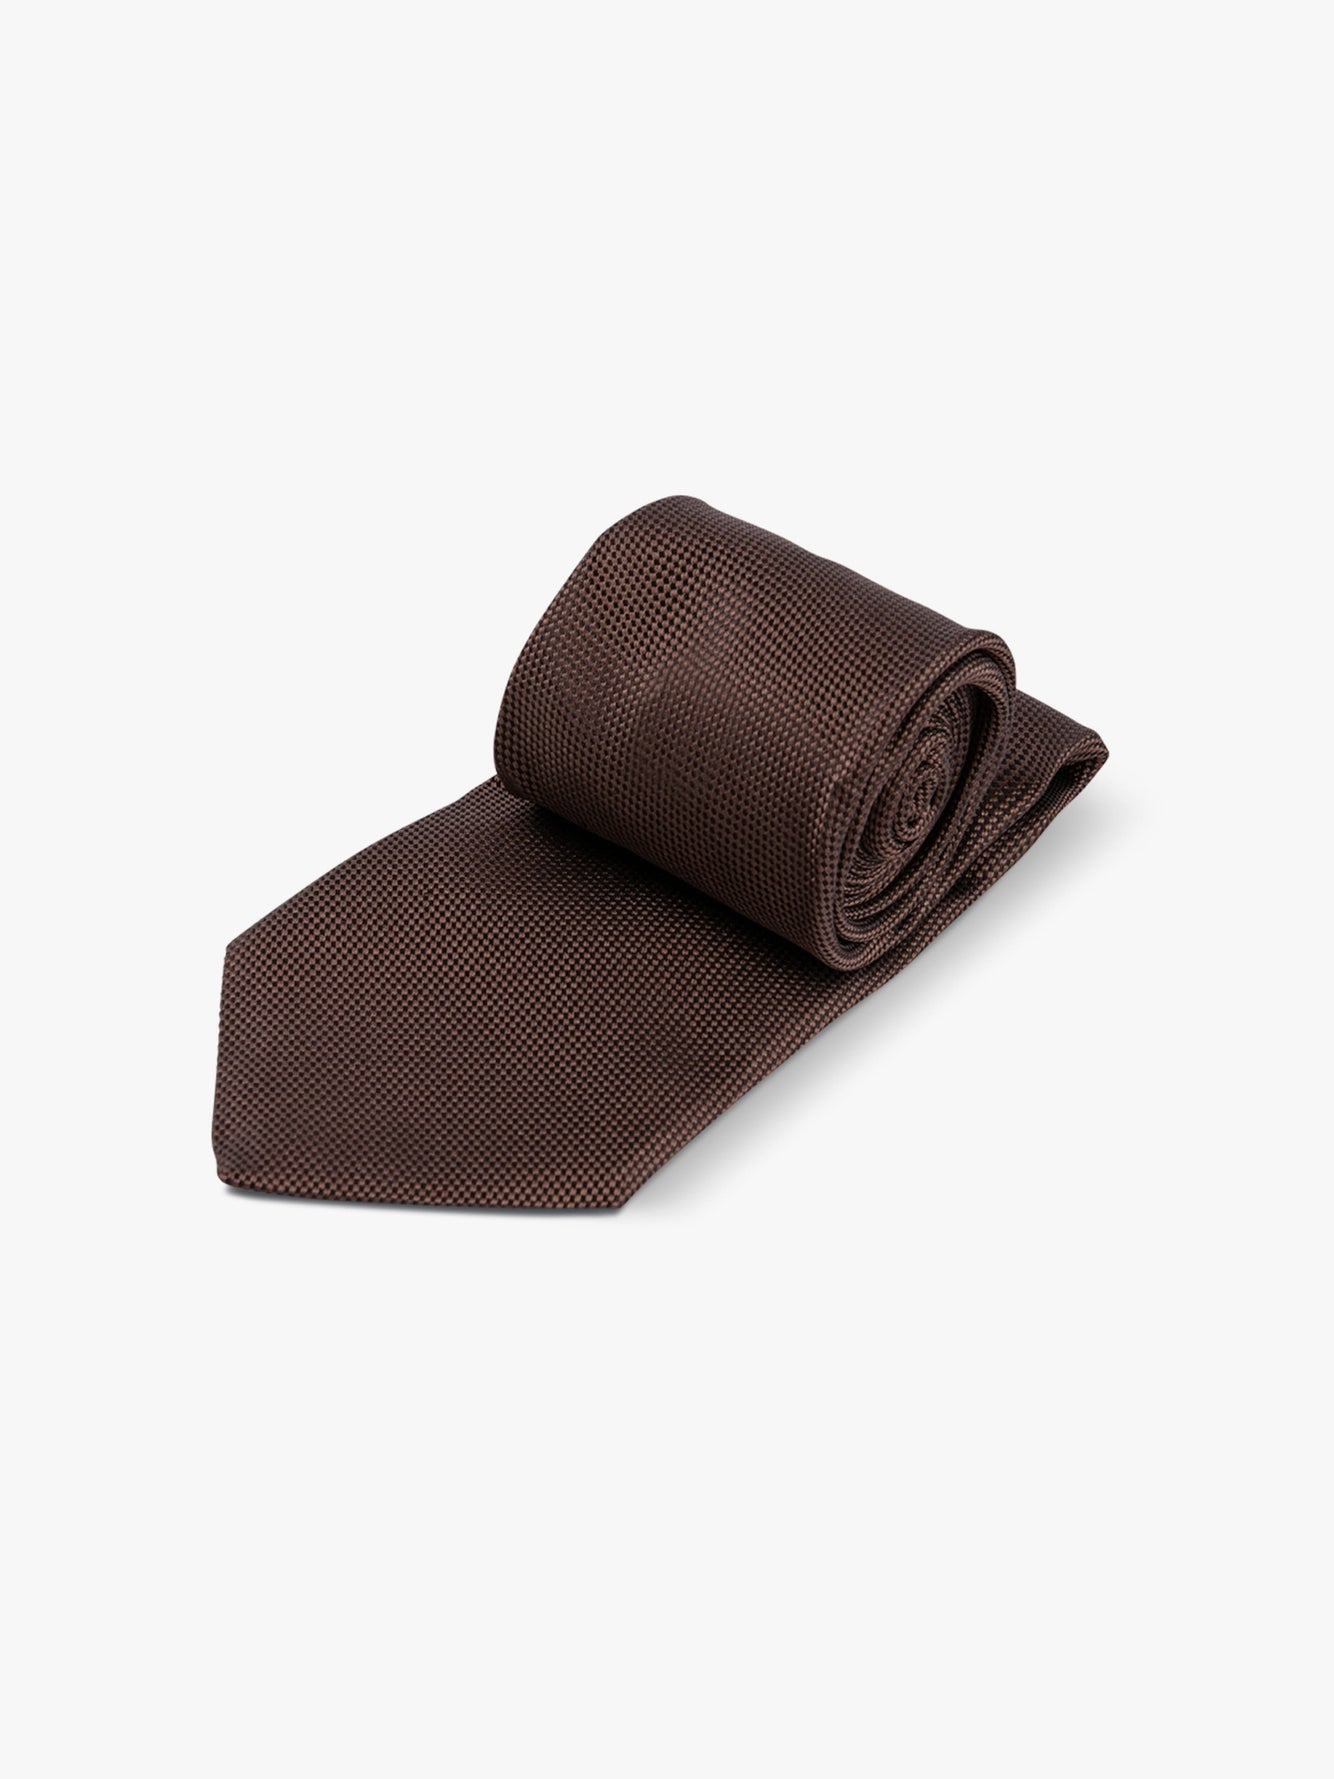 Brown Silk Tie - Grand Le Mar